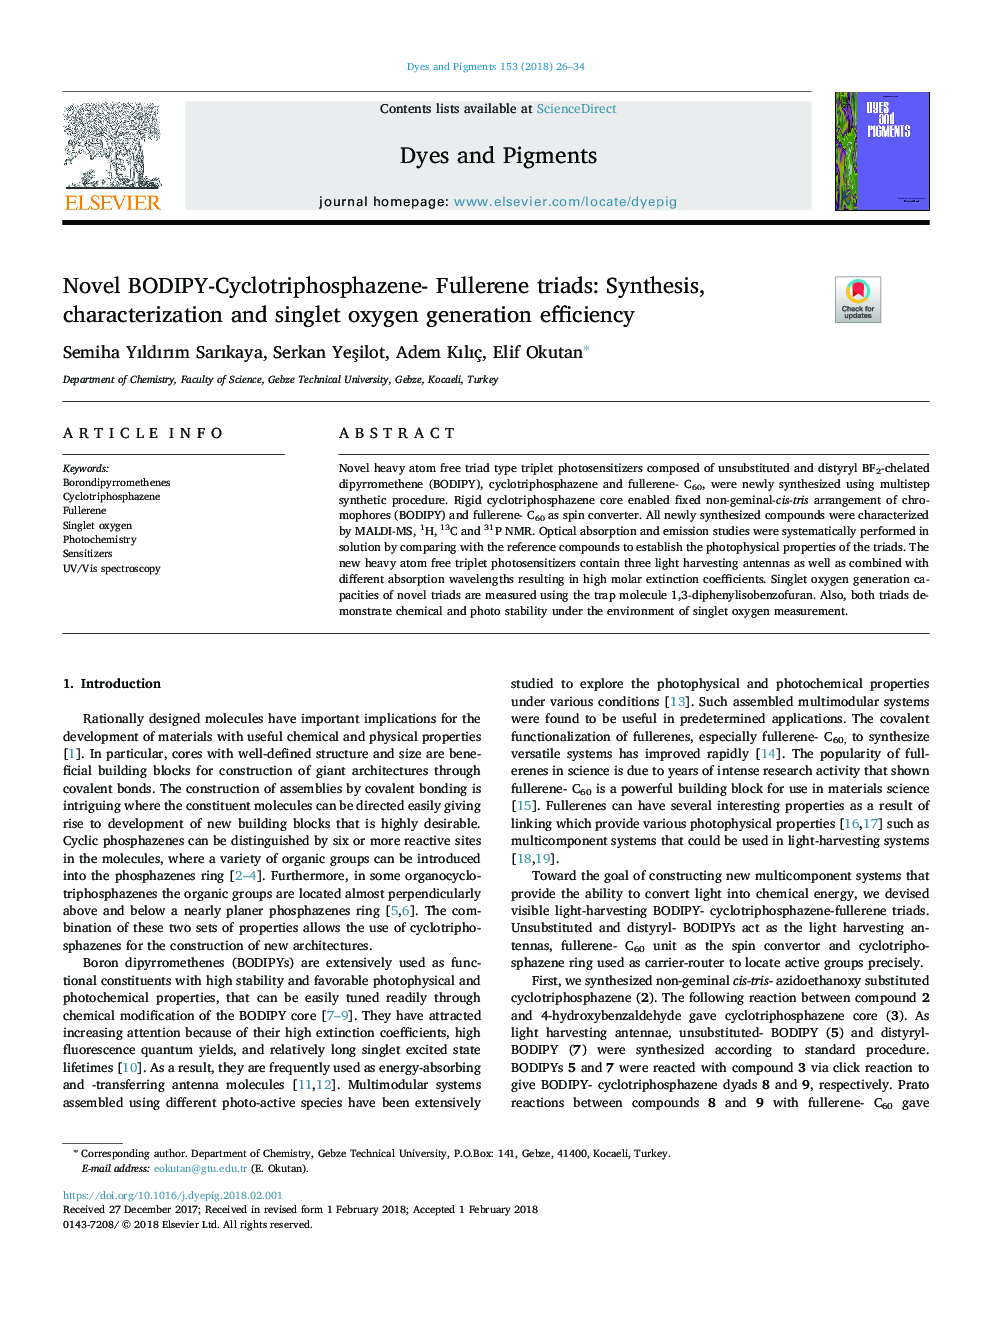 Novel BODIPY-Cyclotriphosphazene- Fullerene triads: Synthesis, characterization and singlet oxygen generation efficiency